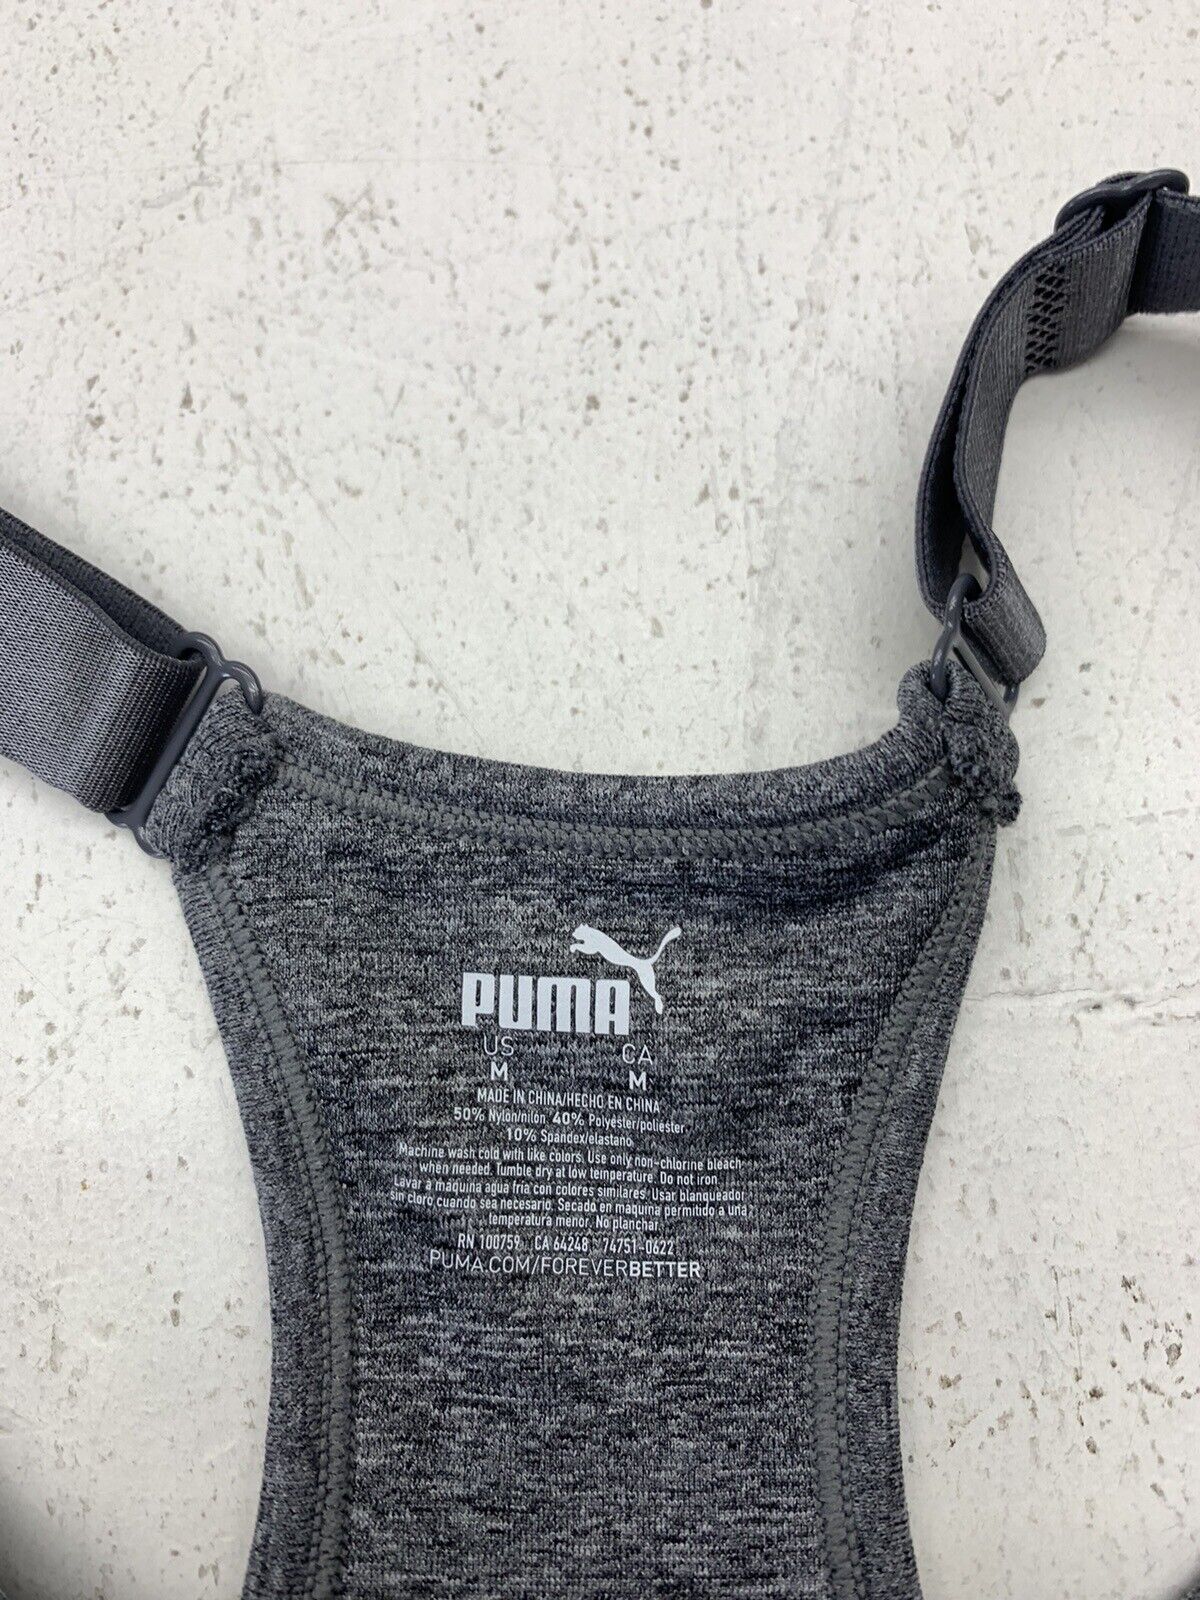 Puma sports bra size M